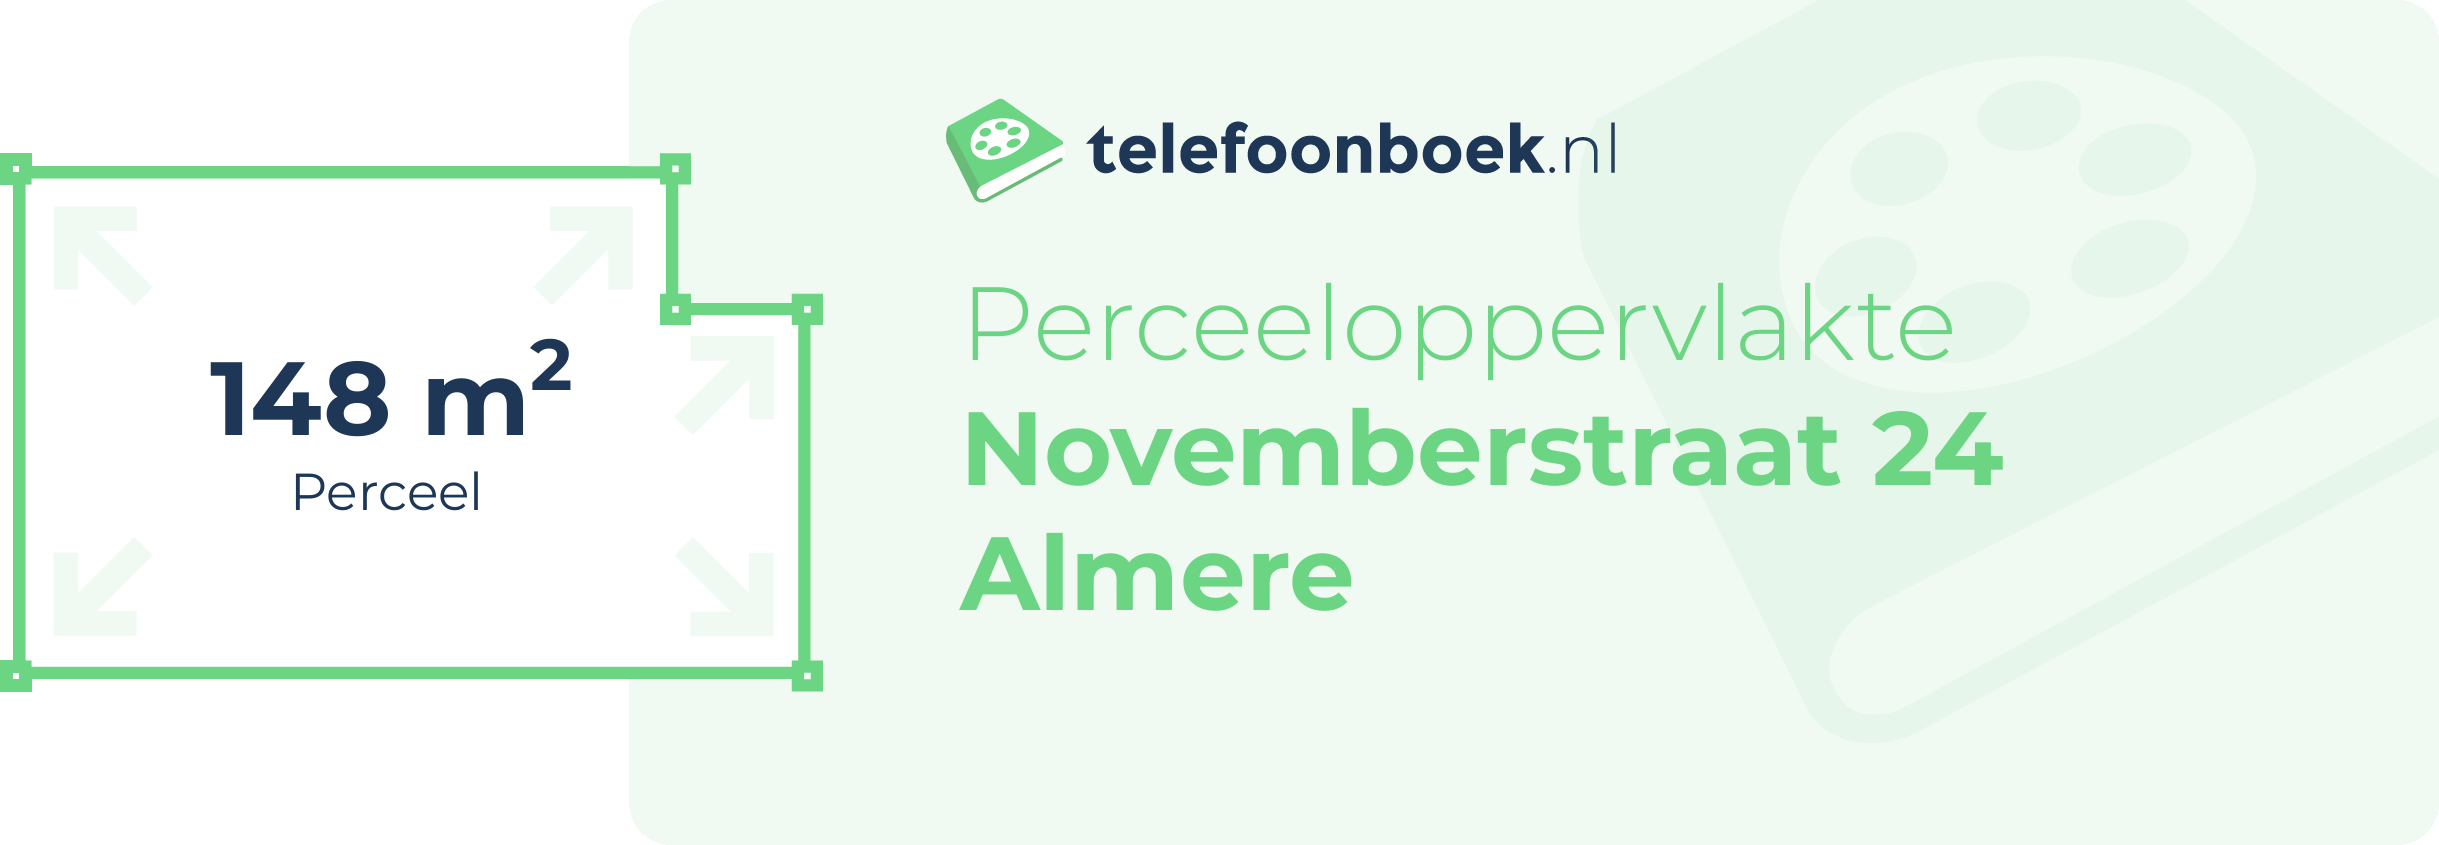 Perceeloppervlakte Novemberstraat 24 Almere